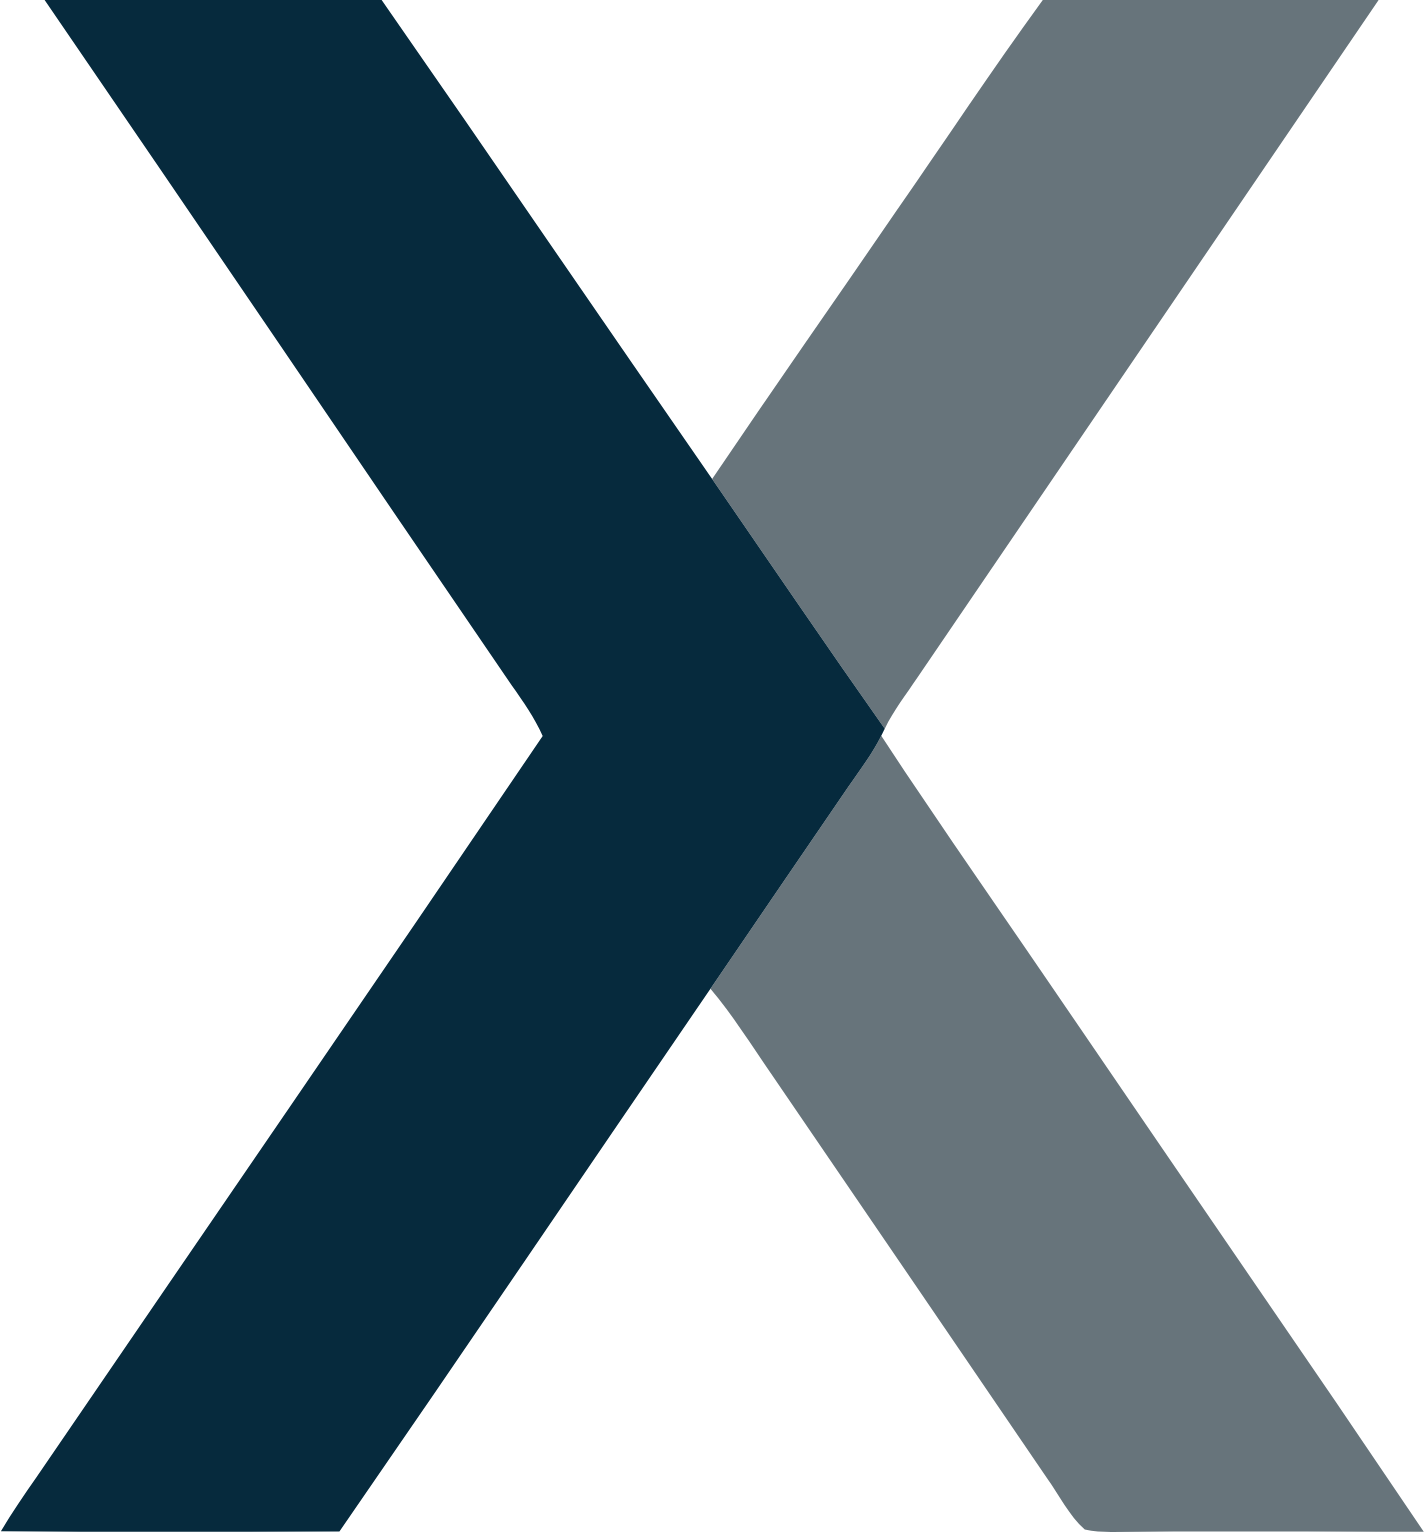 NexPoint Diversified Real Estate Trust logo (PNG transparent)